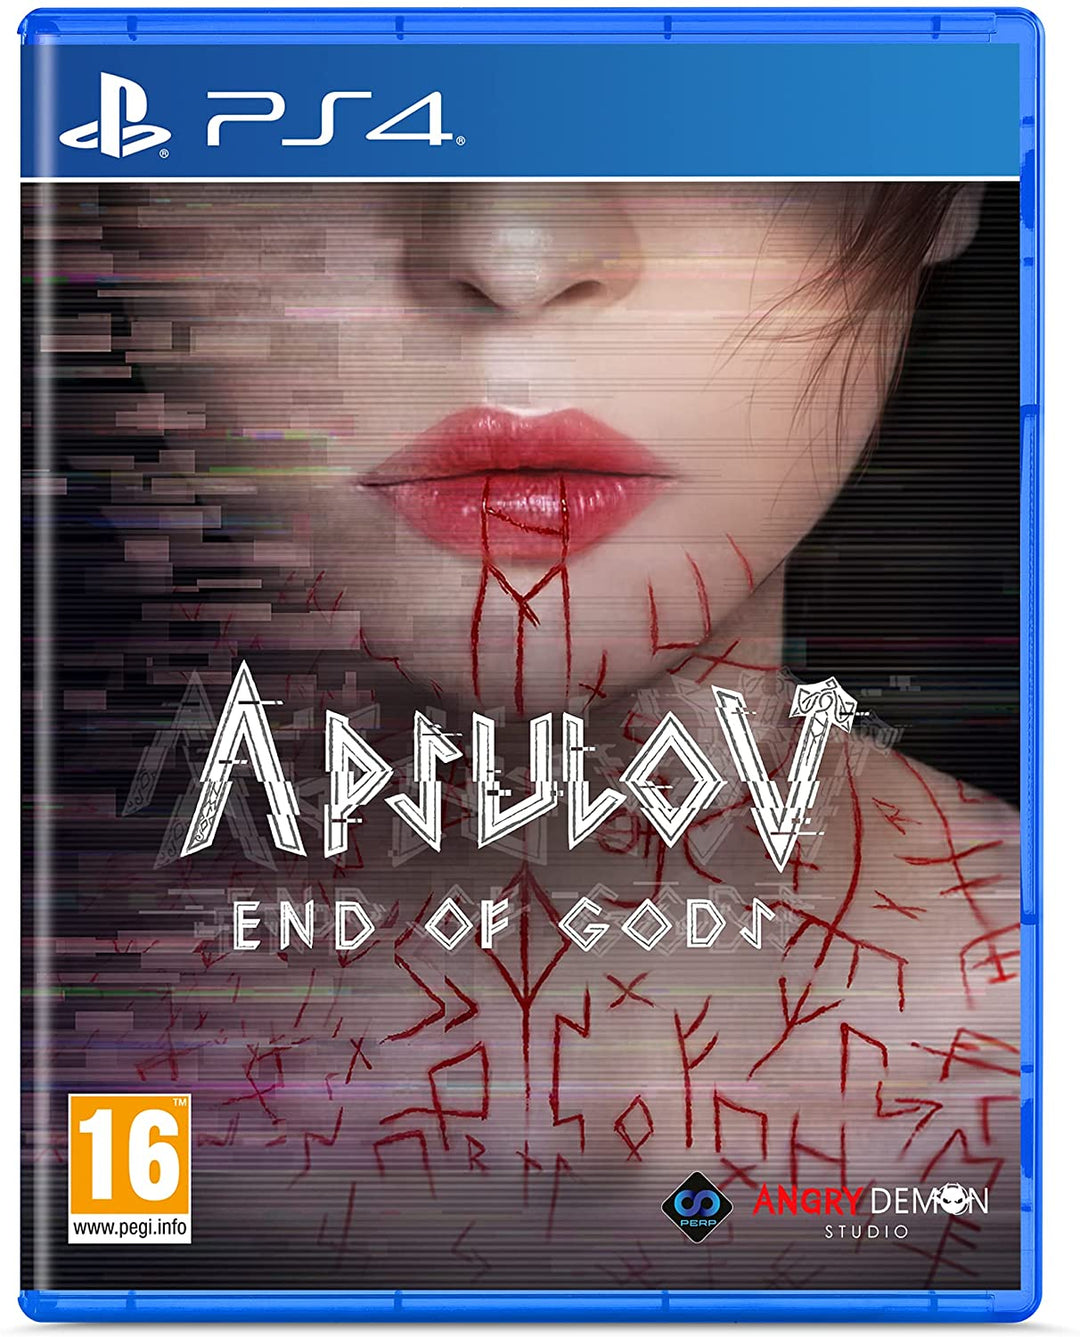 Apsulov: End Of Gods (PS4)